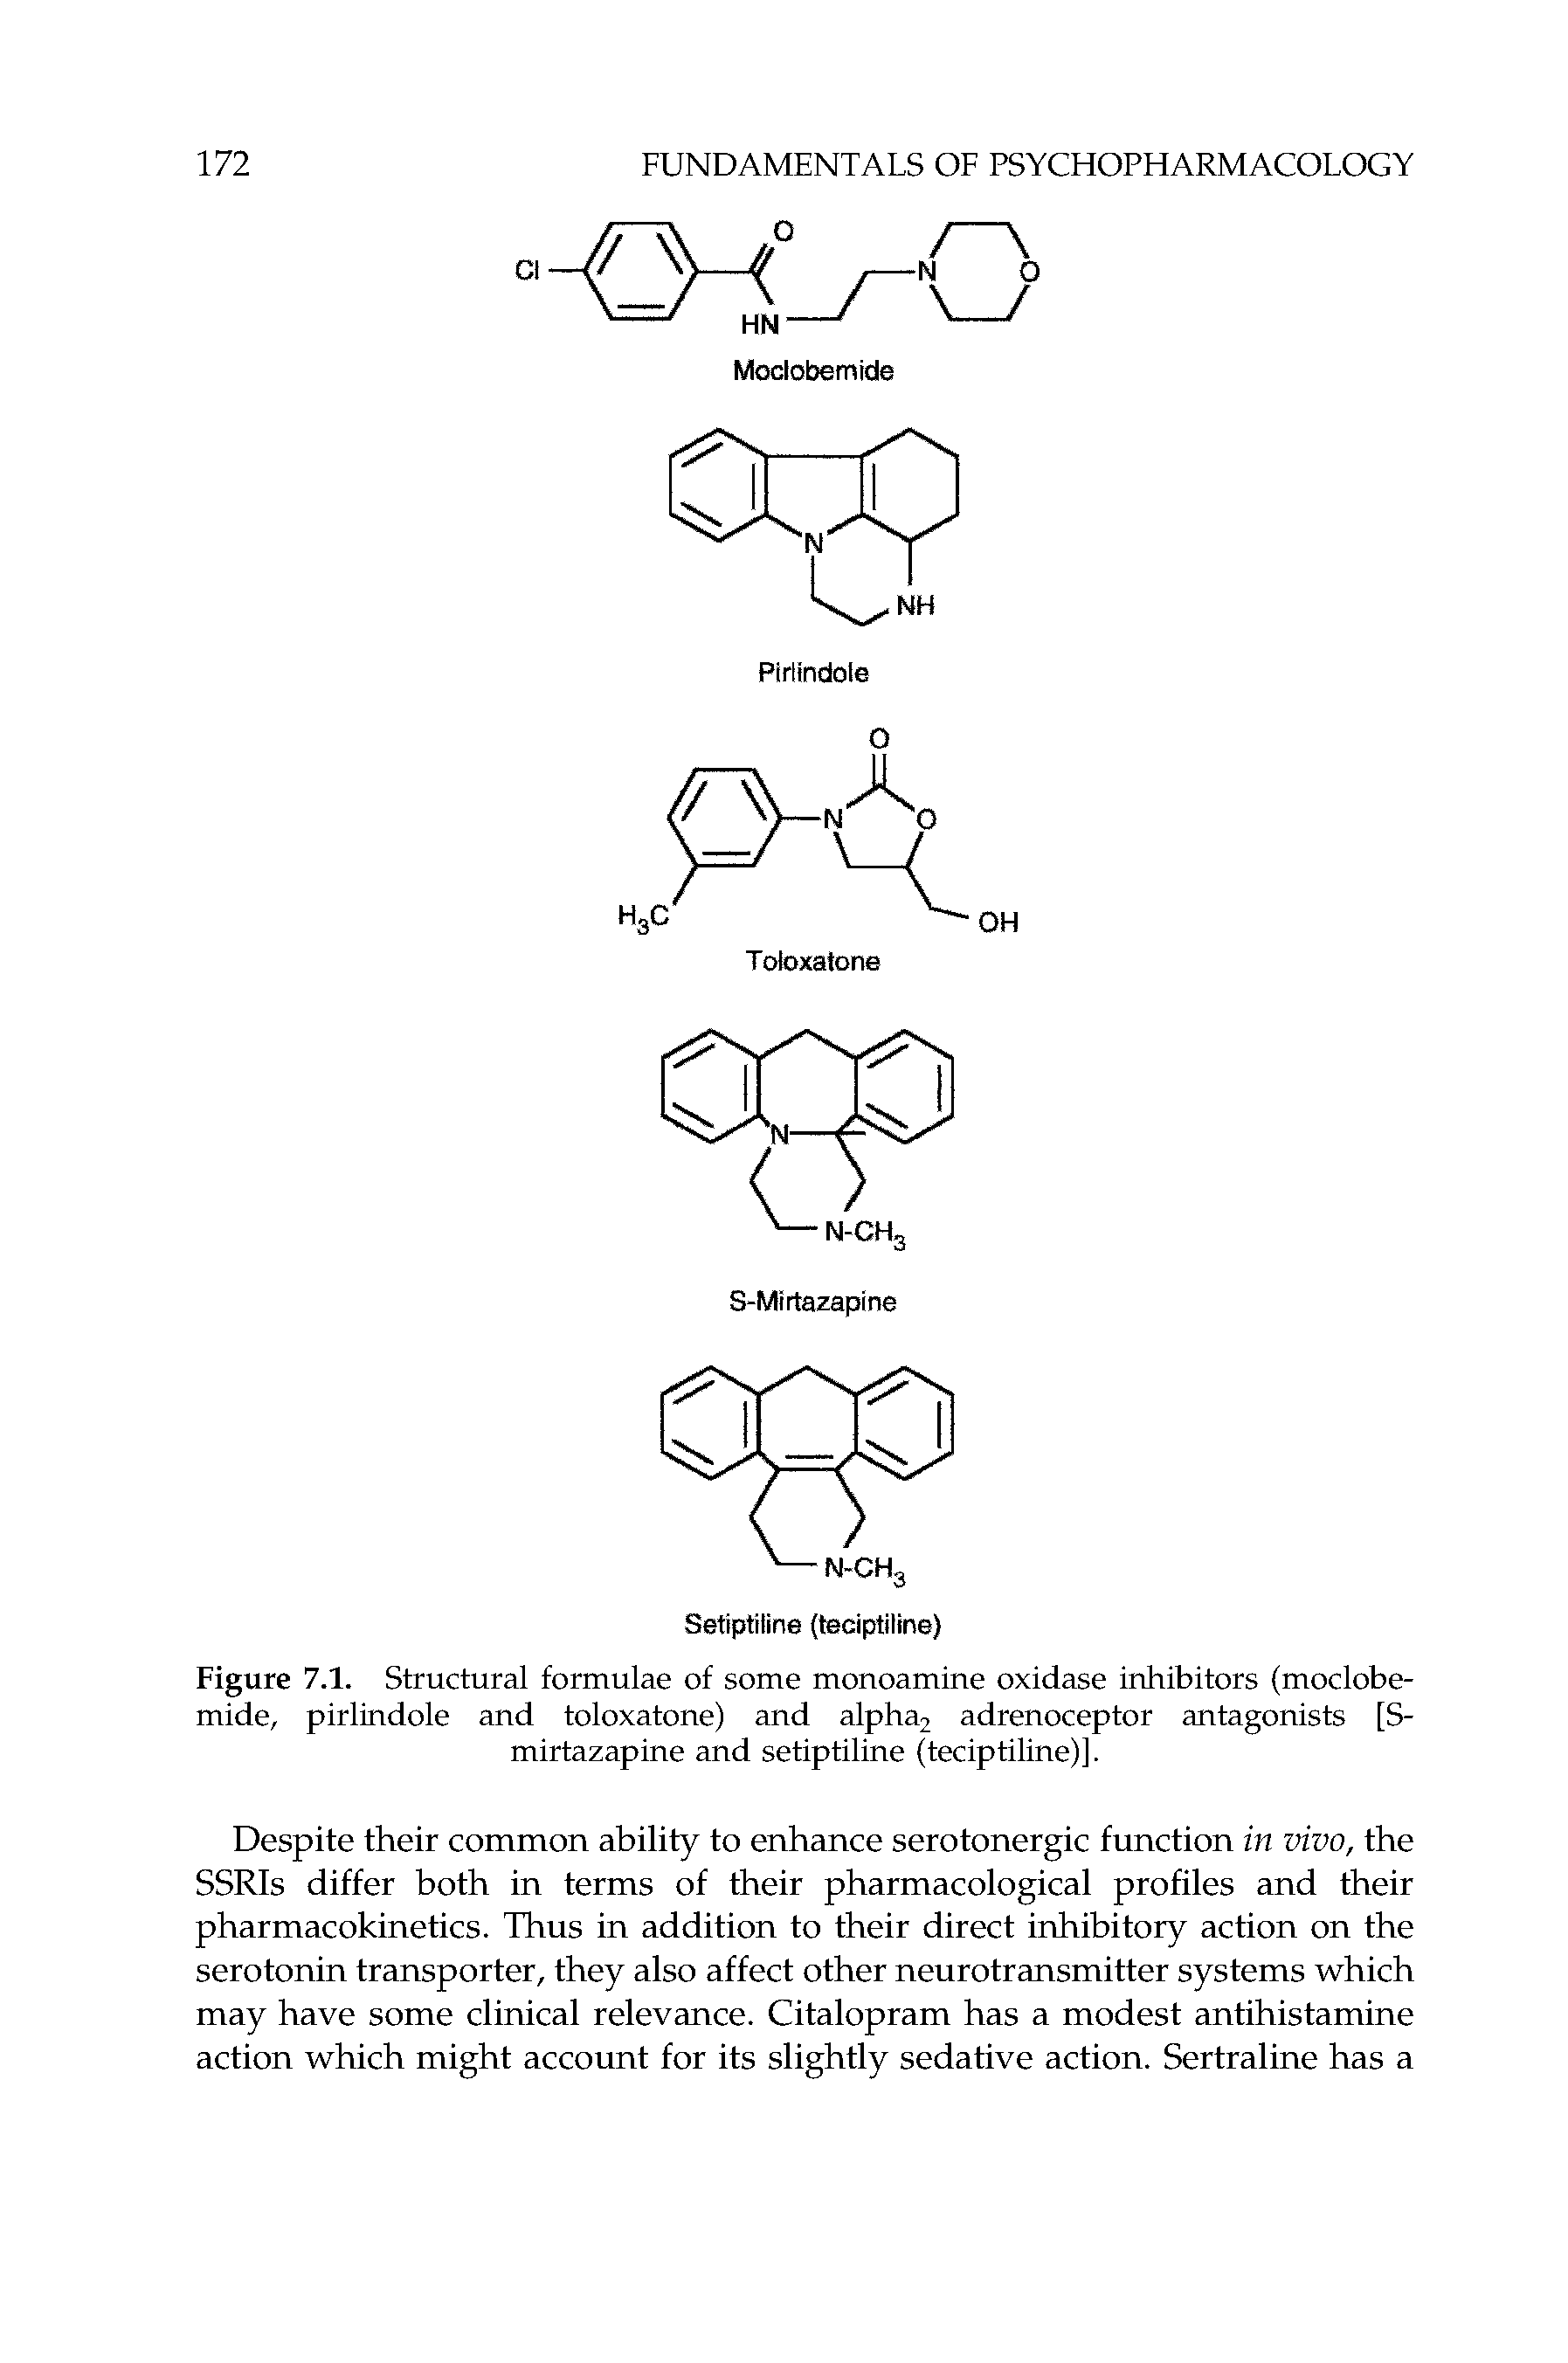 Figure 7.1. Structural formulae of some monoamine oxidase inhibitors (moclobe-mide, pirlindole and toloxatone) and alpha2 adrenoceptor antagonists [S-mirtazapine and setiptiline (teciptiline)].